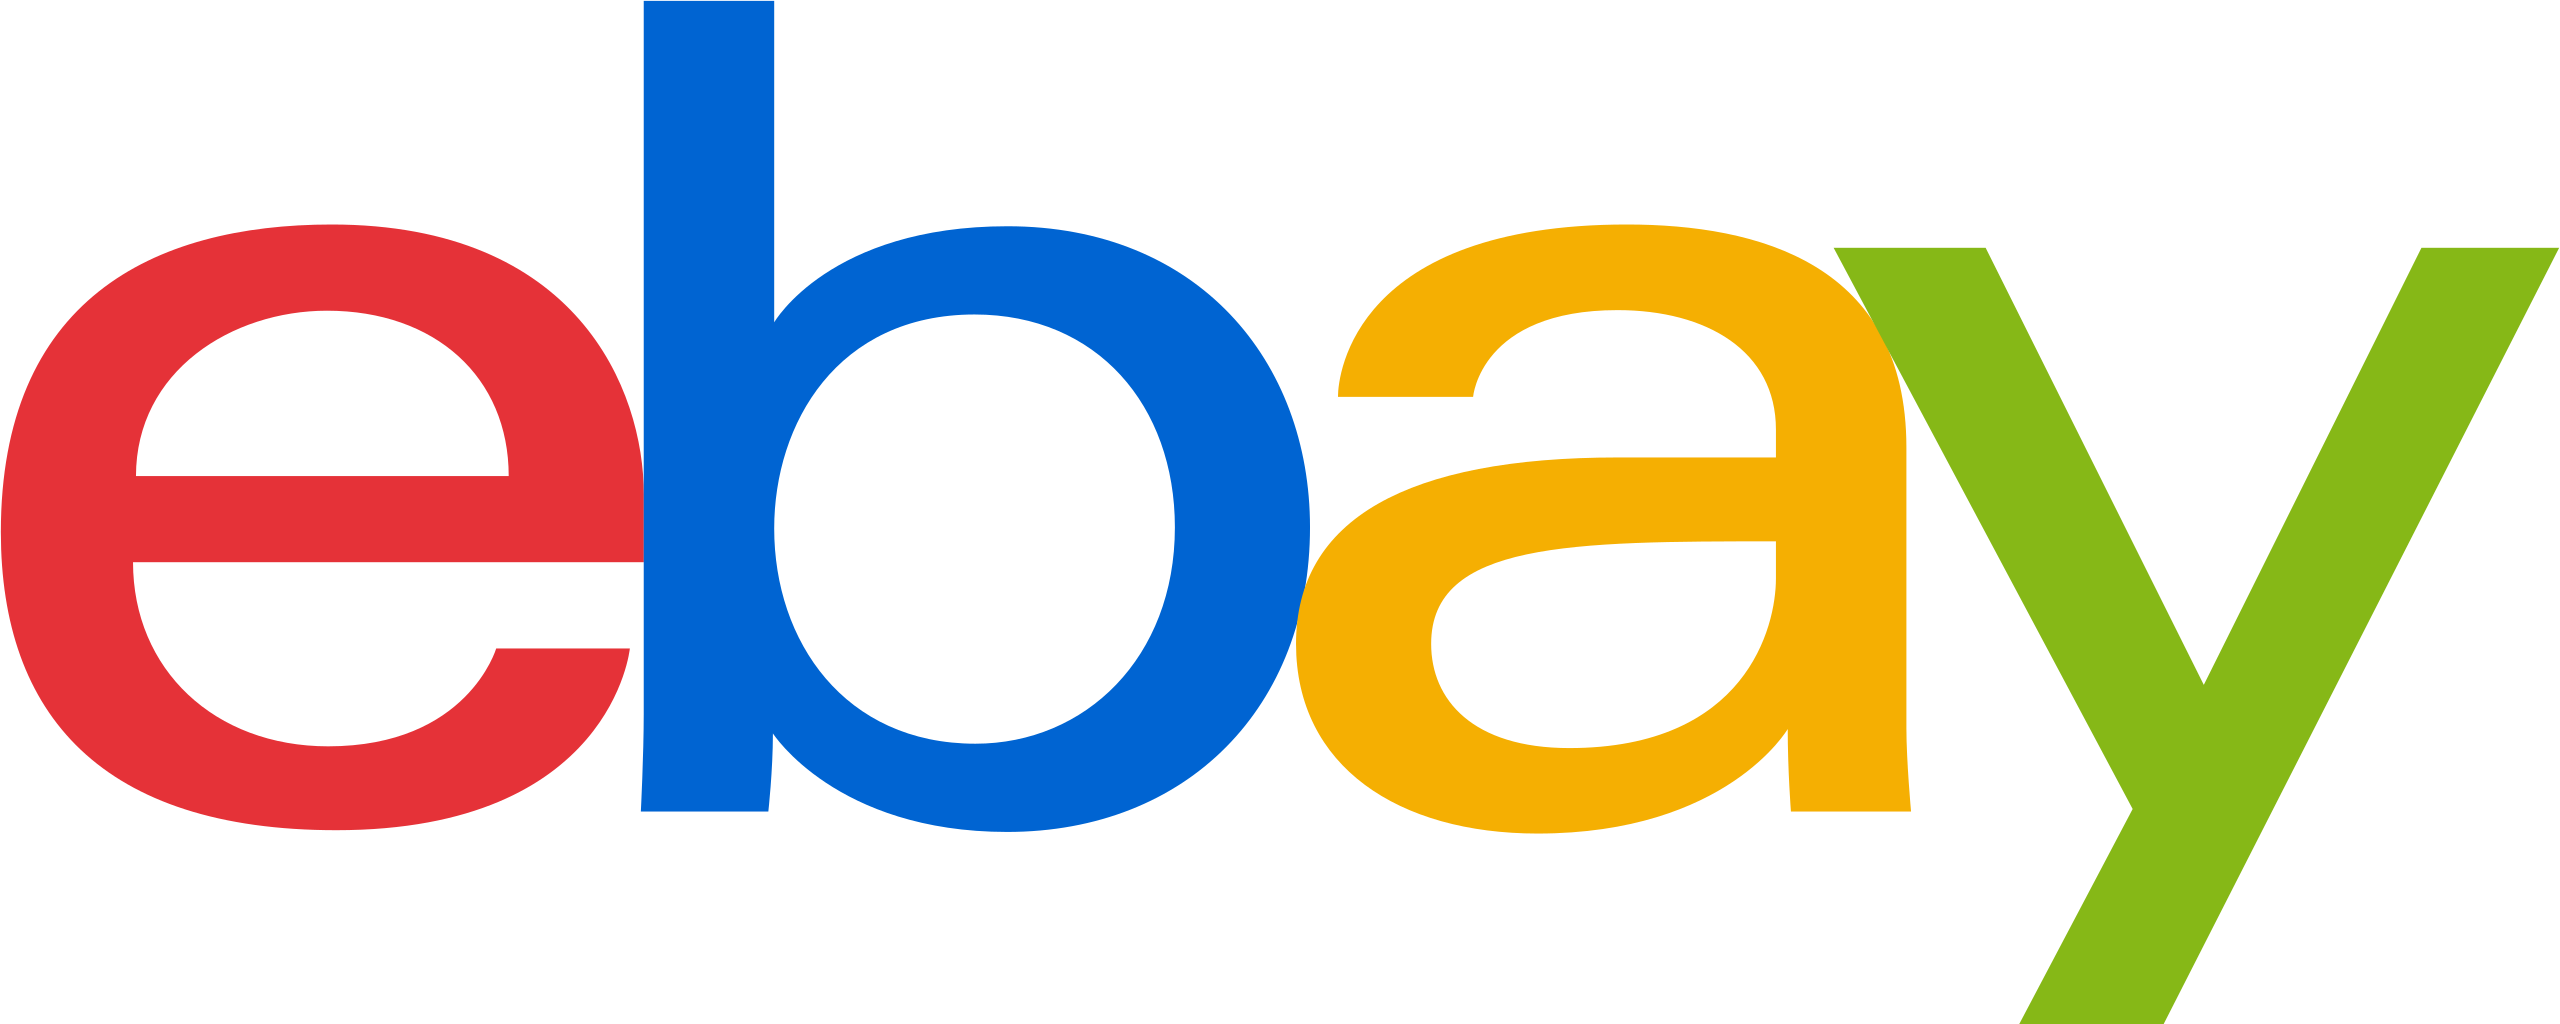 File:EBay logo.svg - Wikimedia Commons